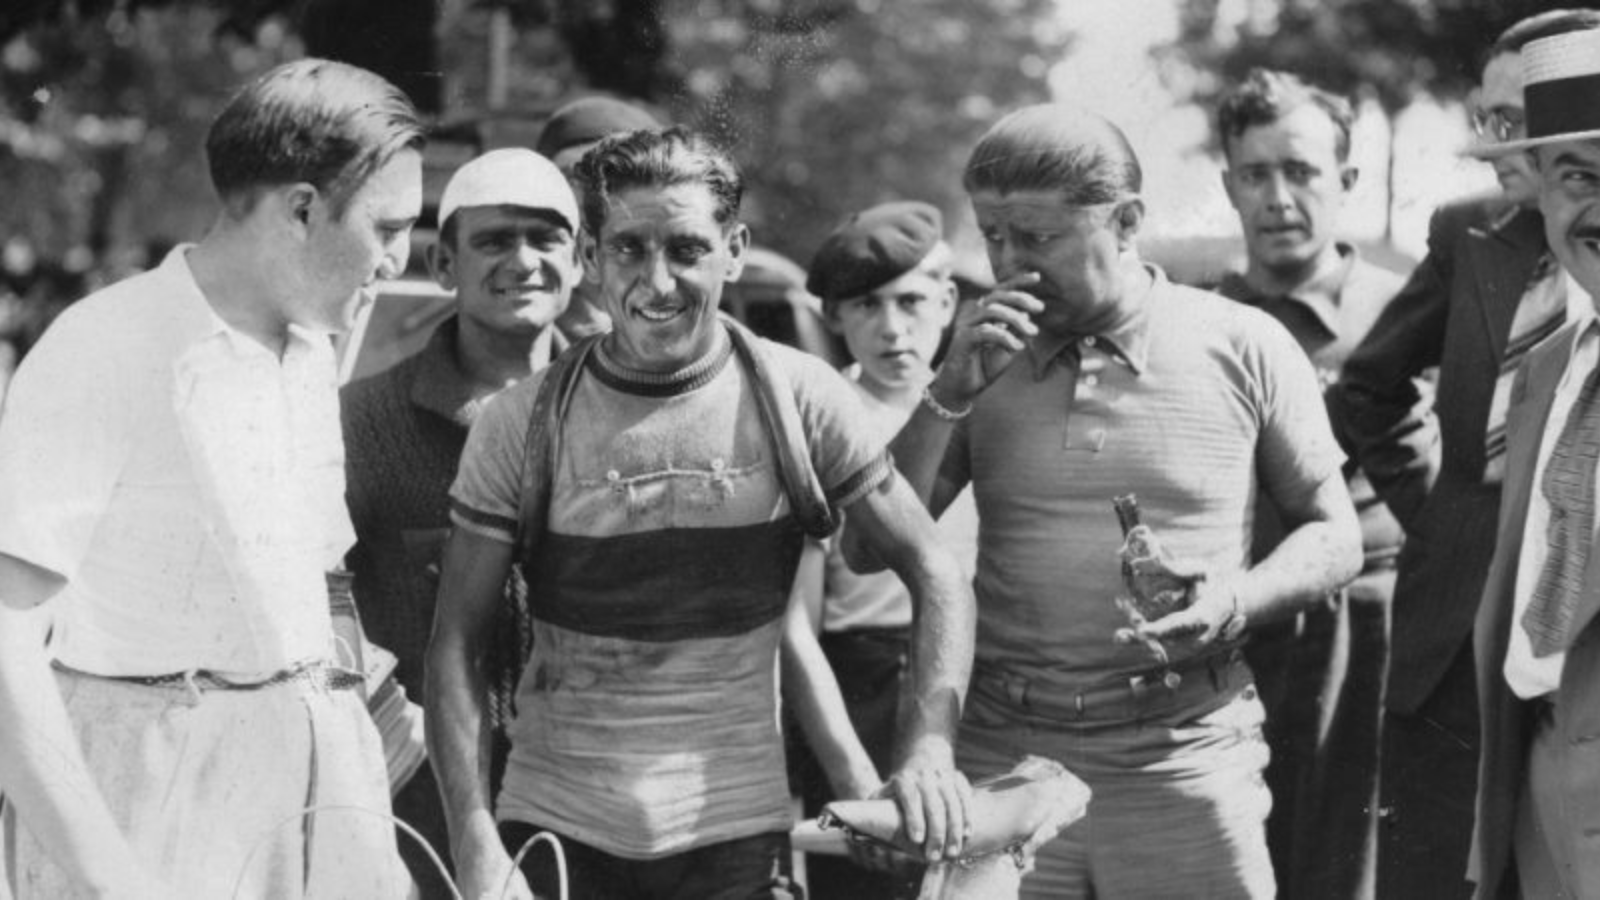 Julián Berrendero winner of Vuelta a Espana 1941 and 1942